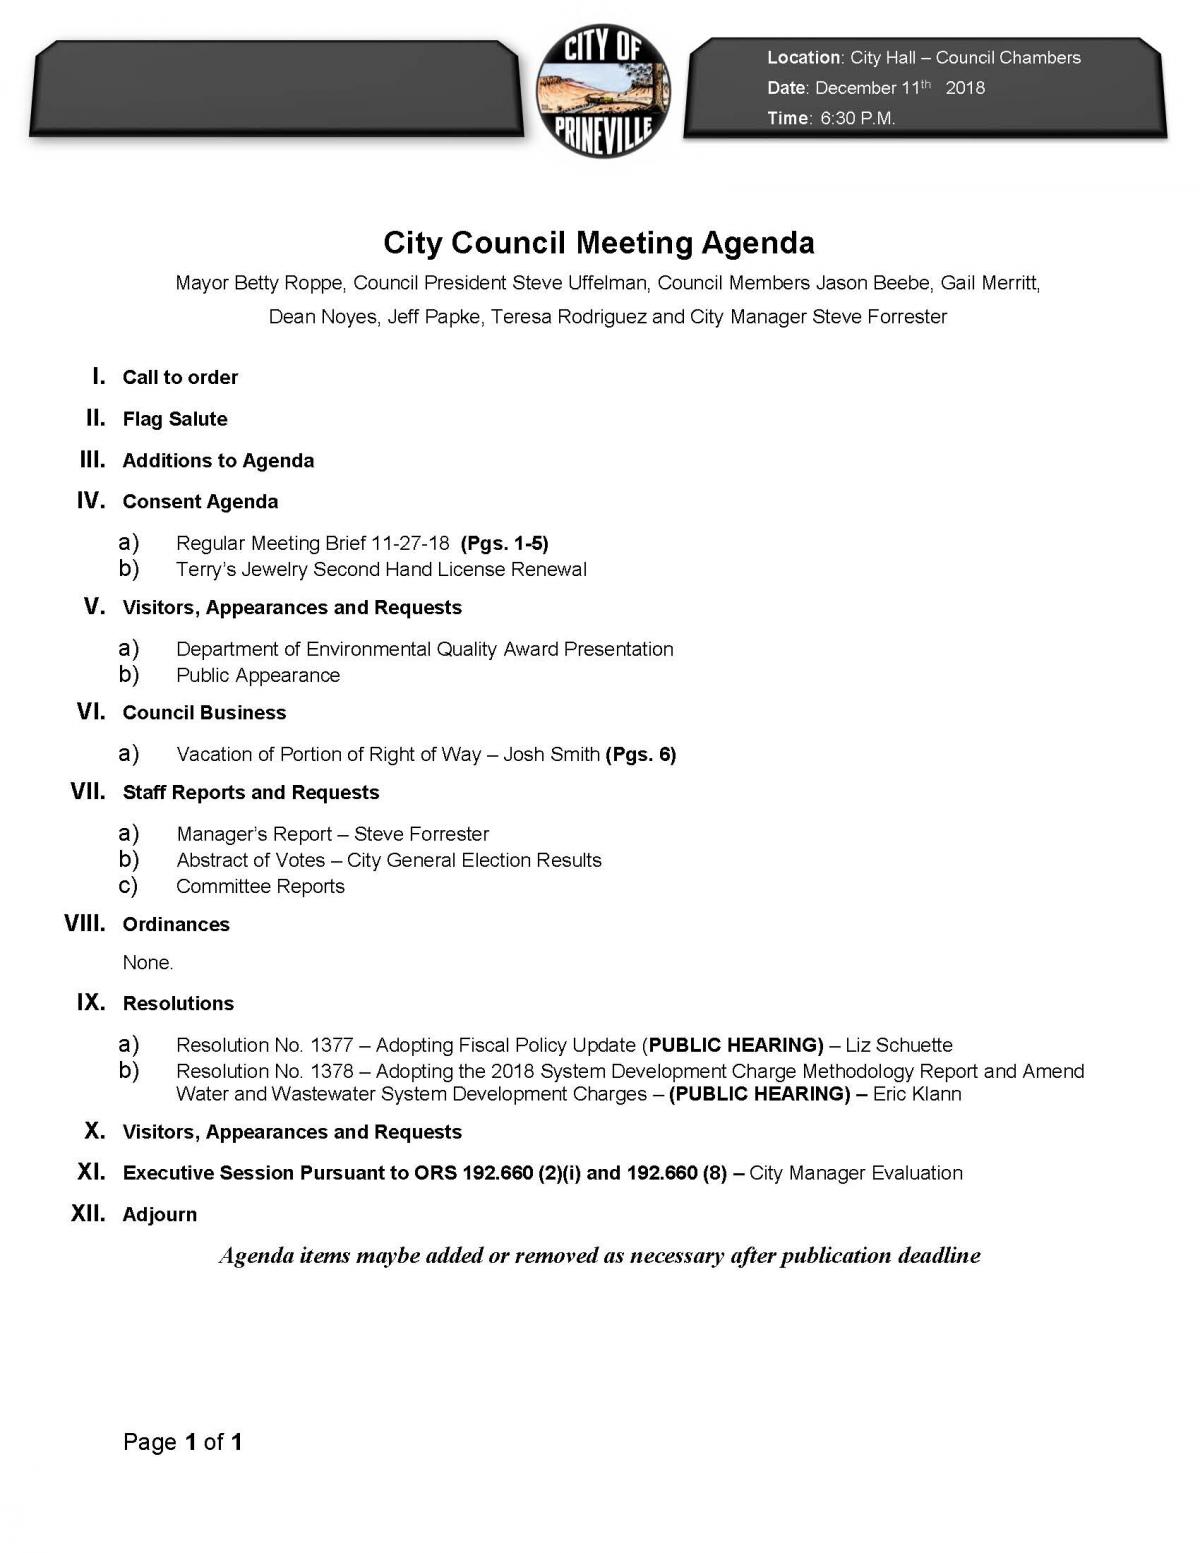 Council Agenda 12-11-18